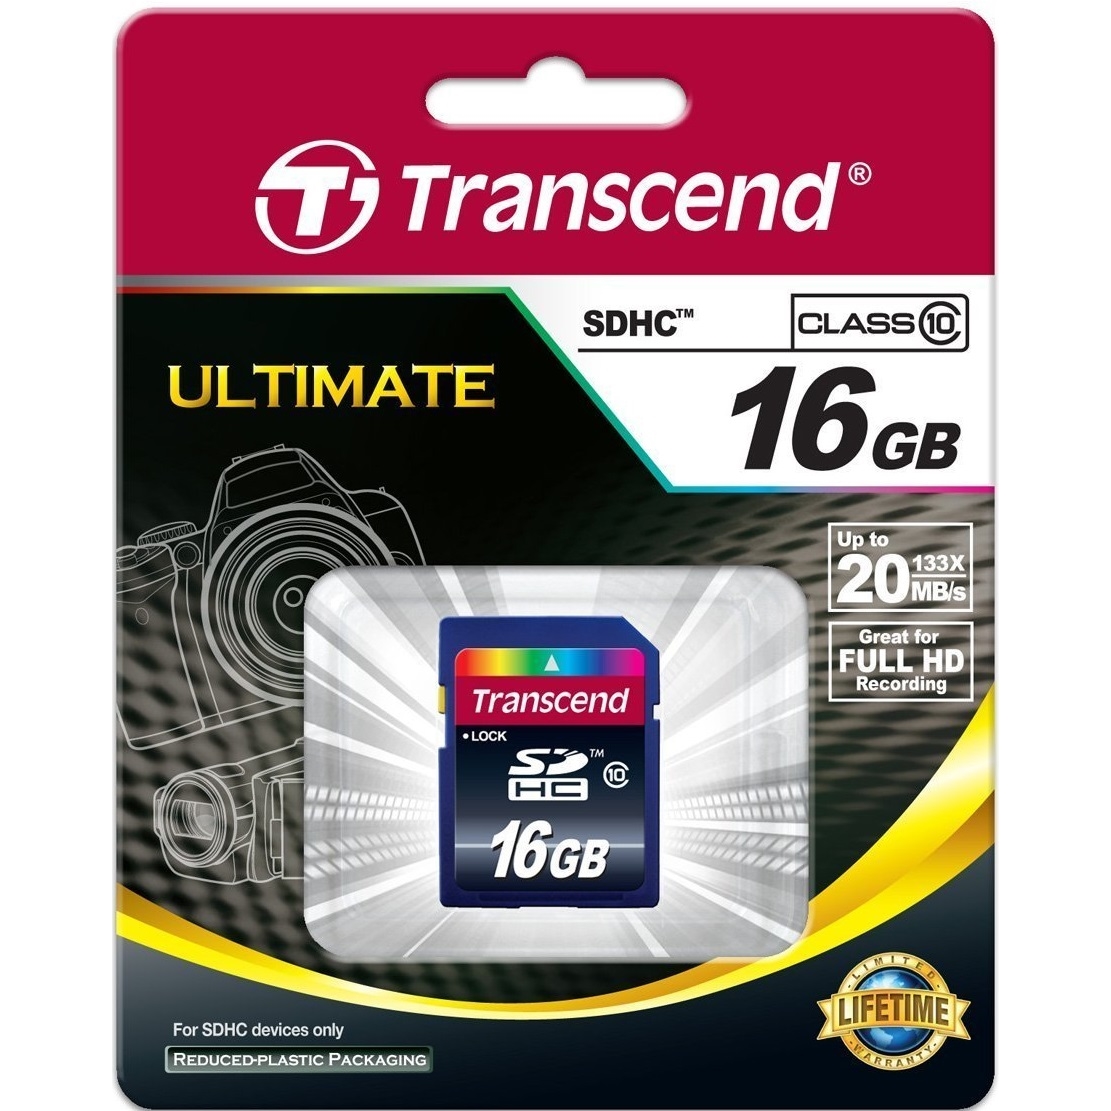 Original Transcend Class 10 16GB SDHC Memory Card (TS16GSDHC10)